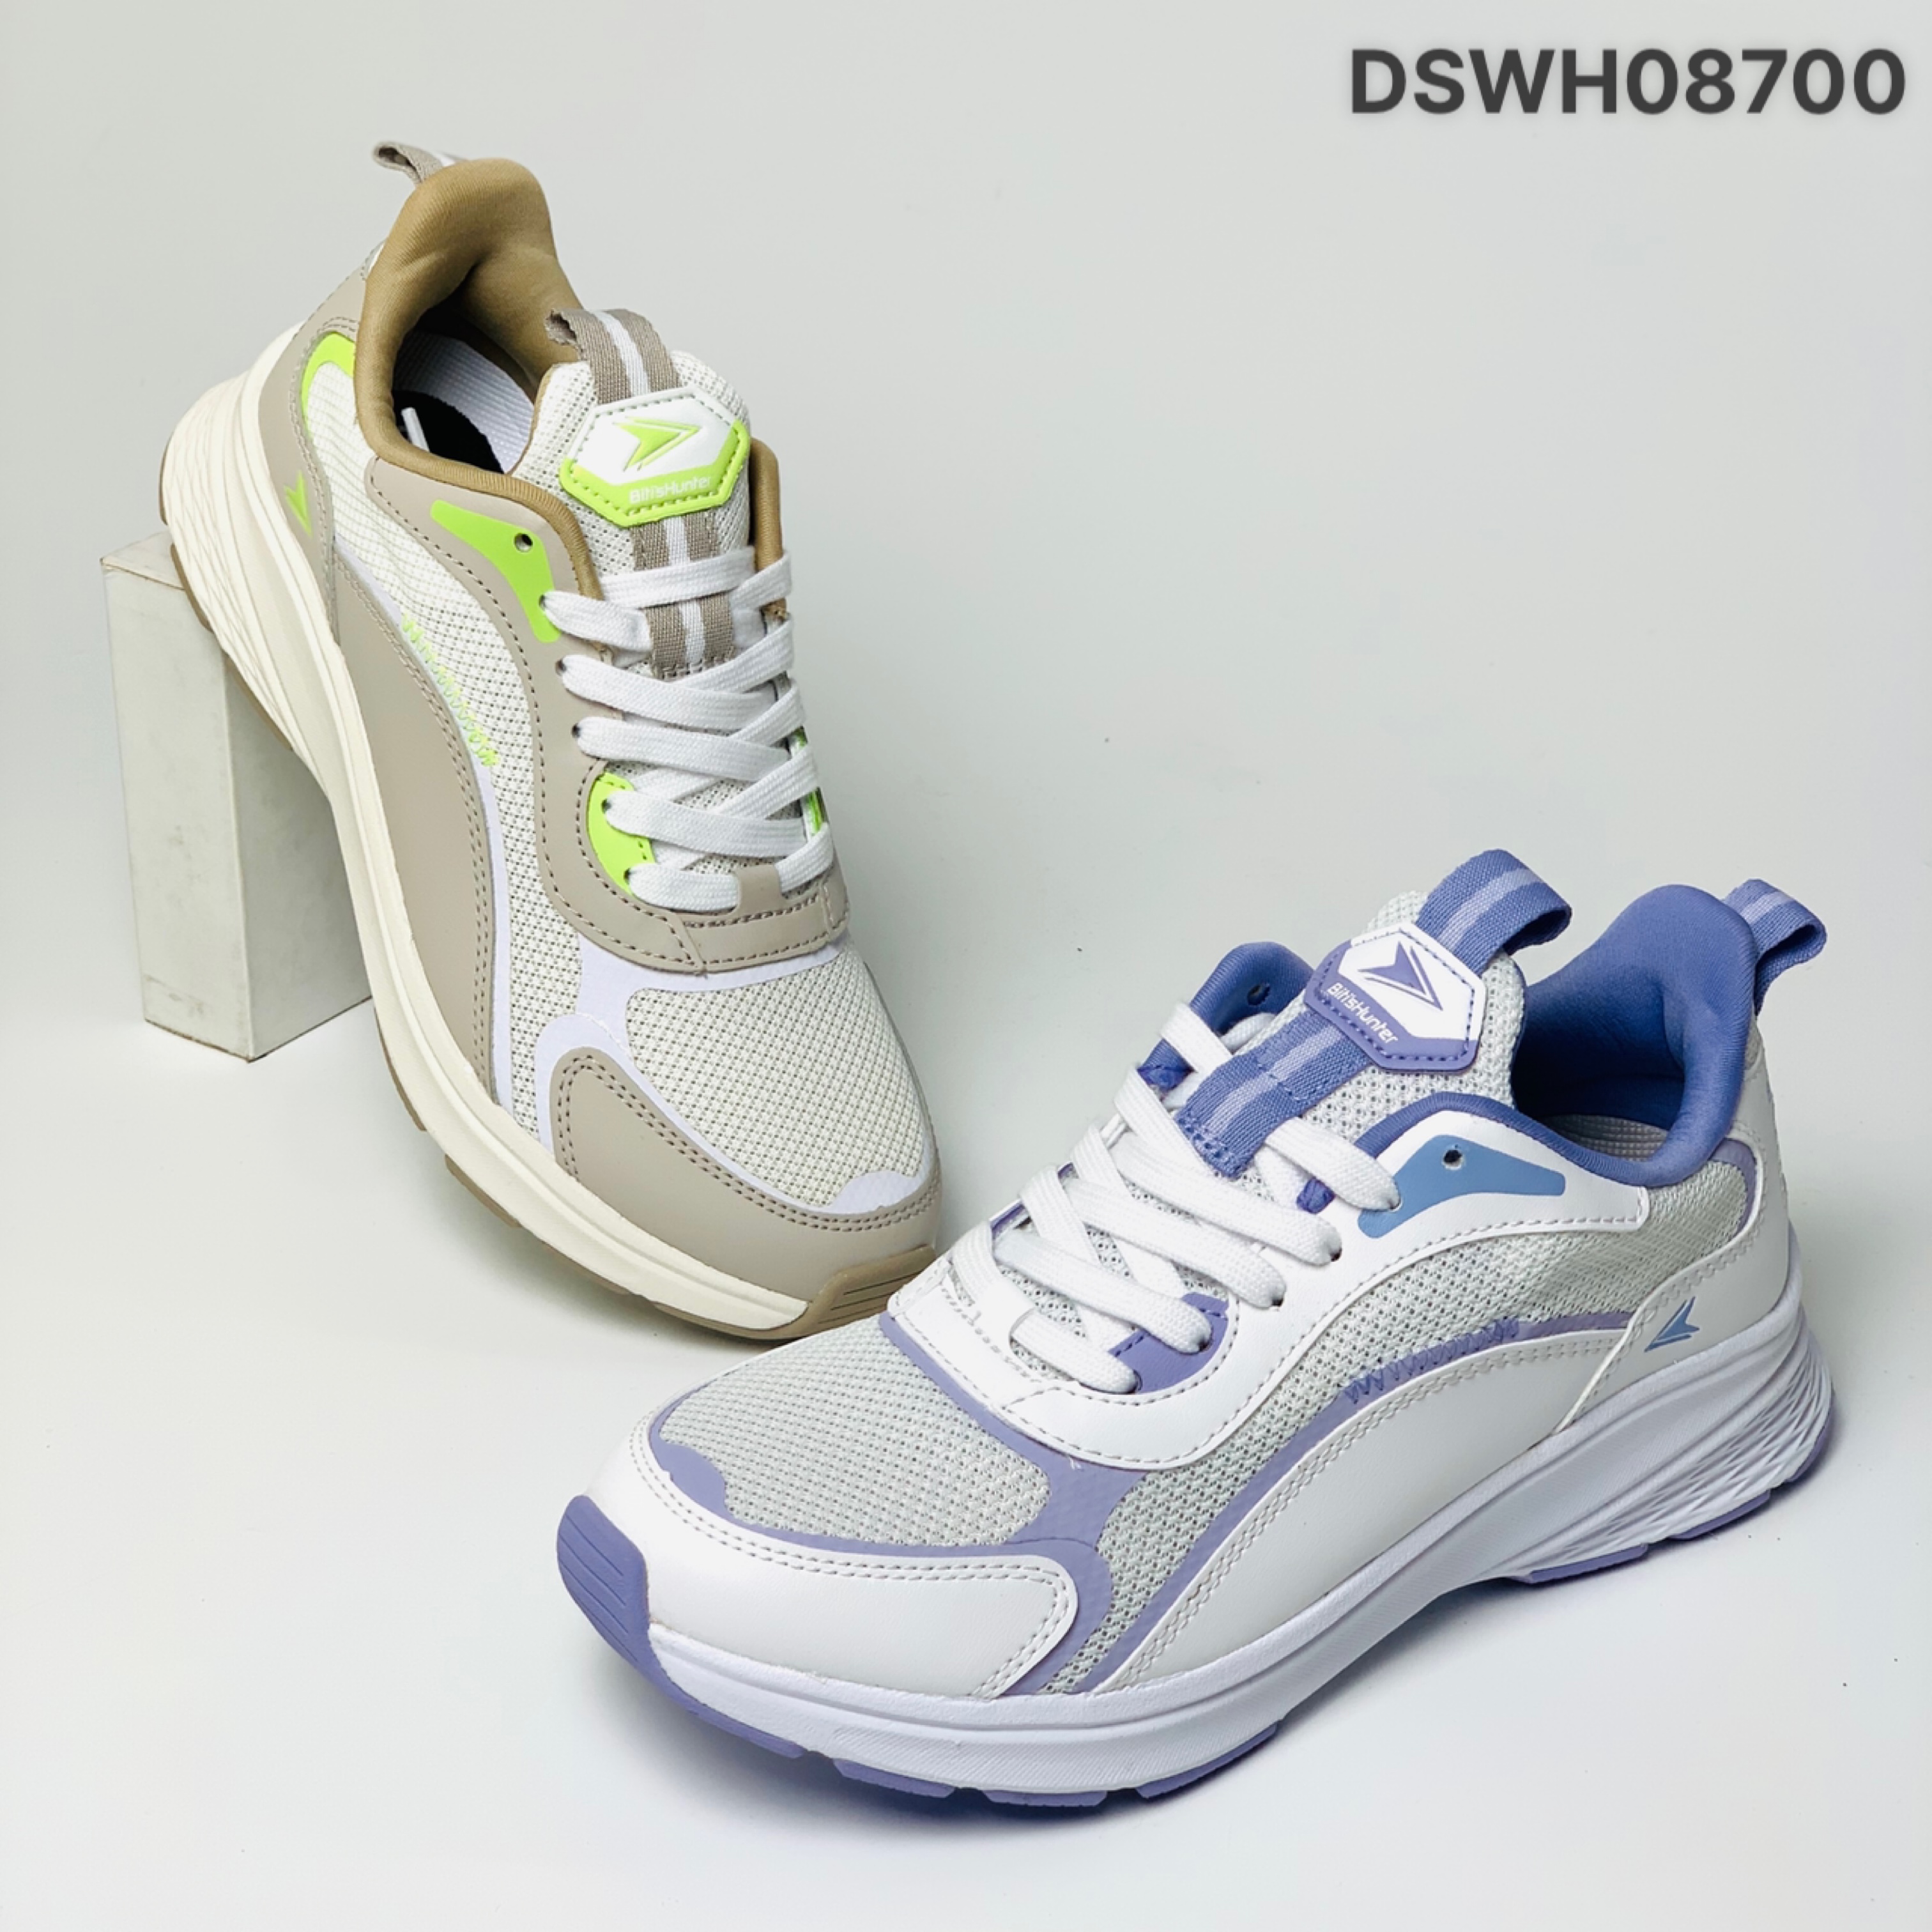 Women s sneakers-core luxury men and women s sneakers-dswh08700